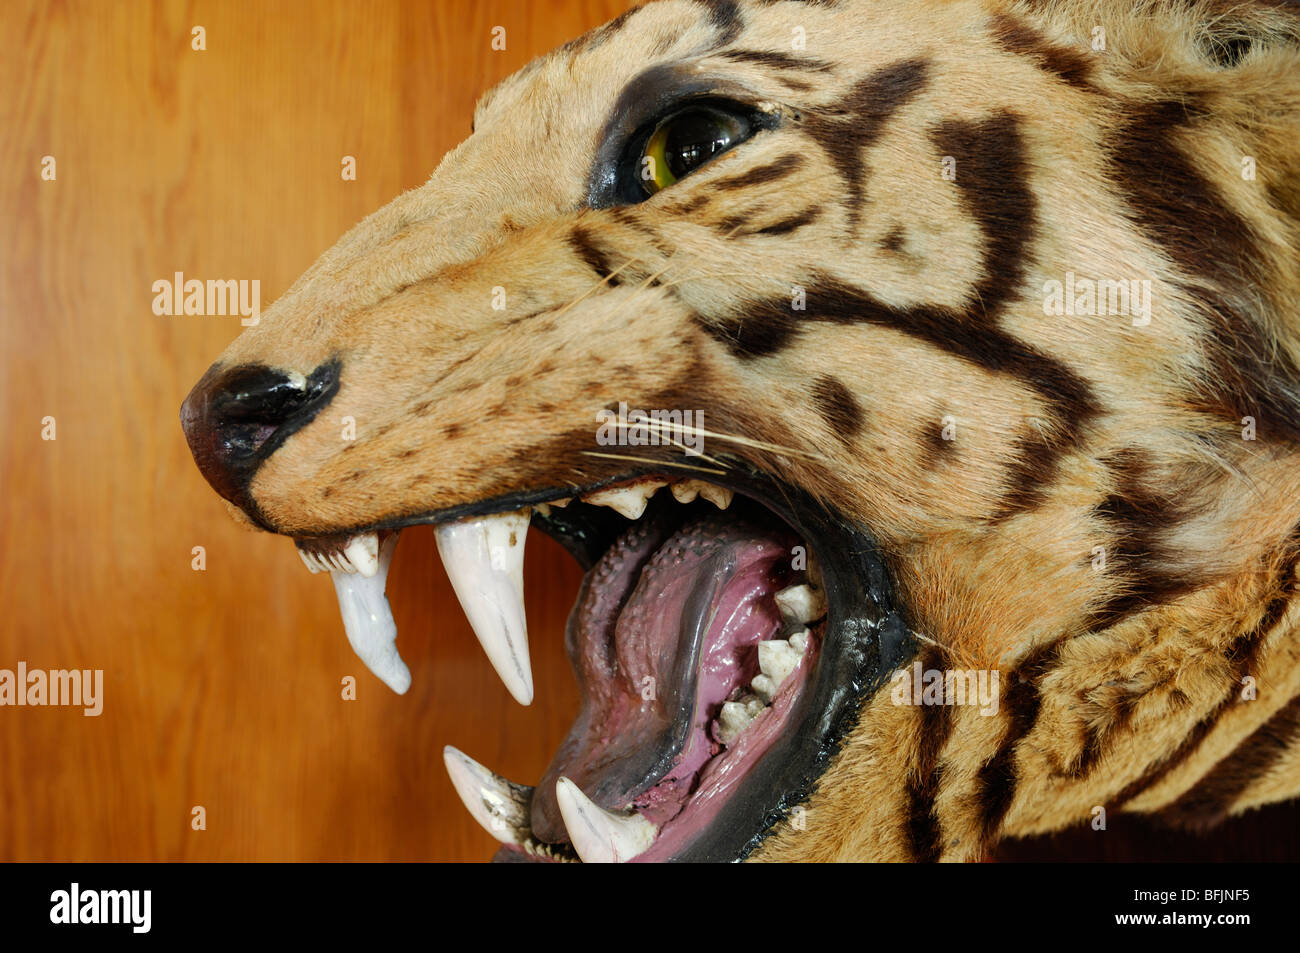 Stuffed tiger's head baring sharp teeth close up Stock Photo